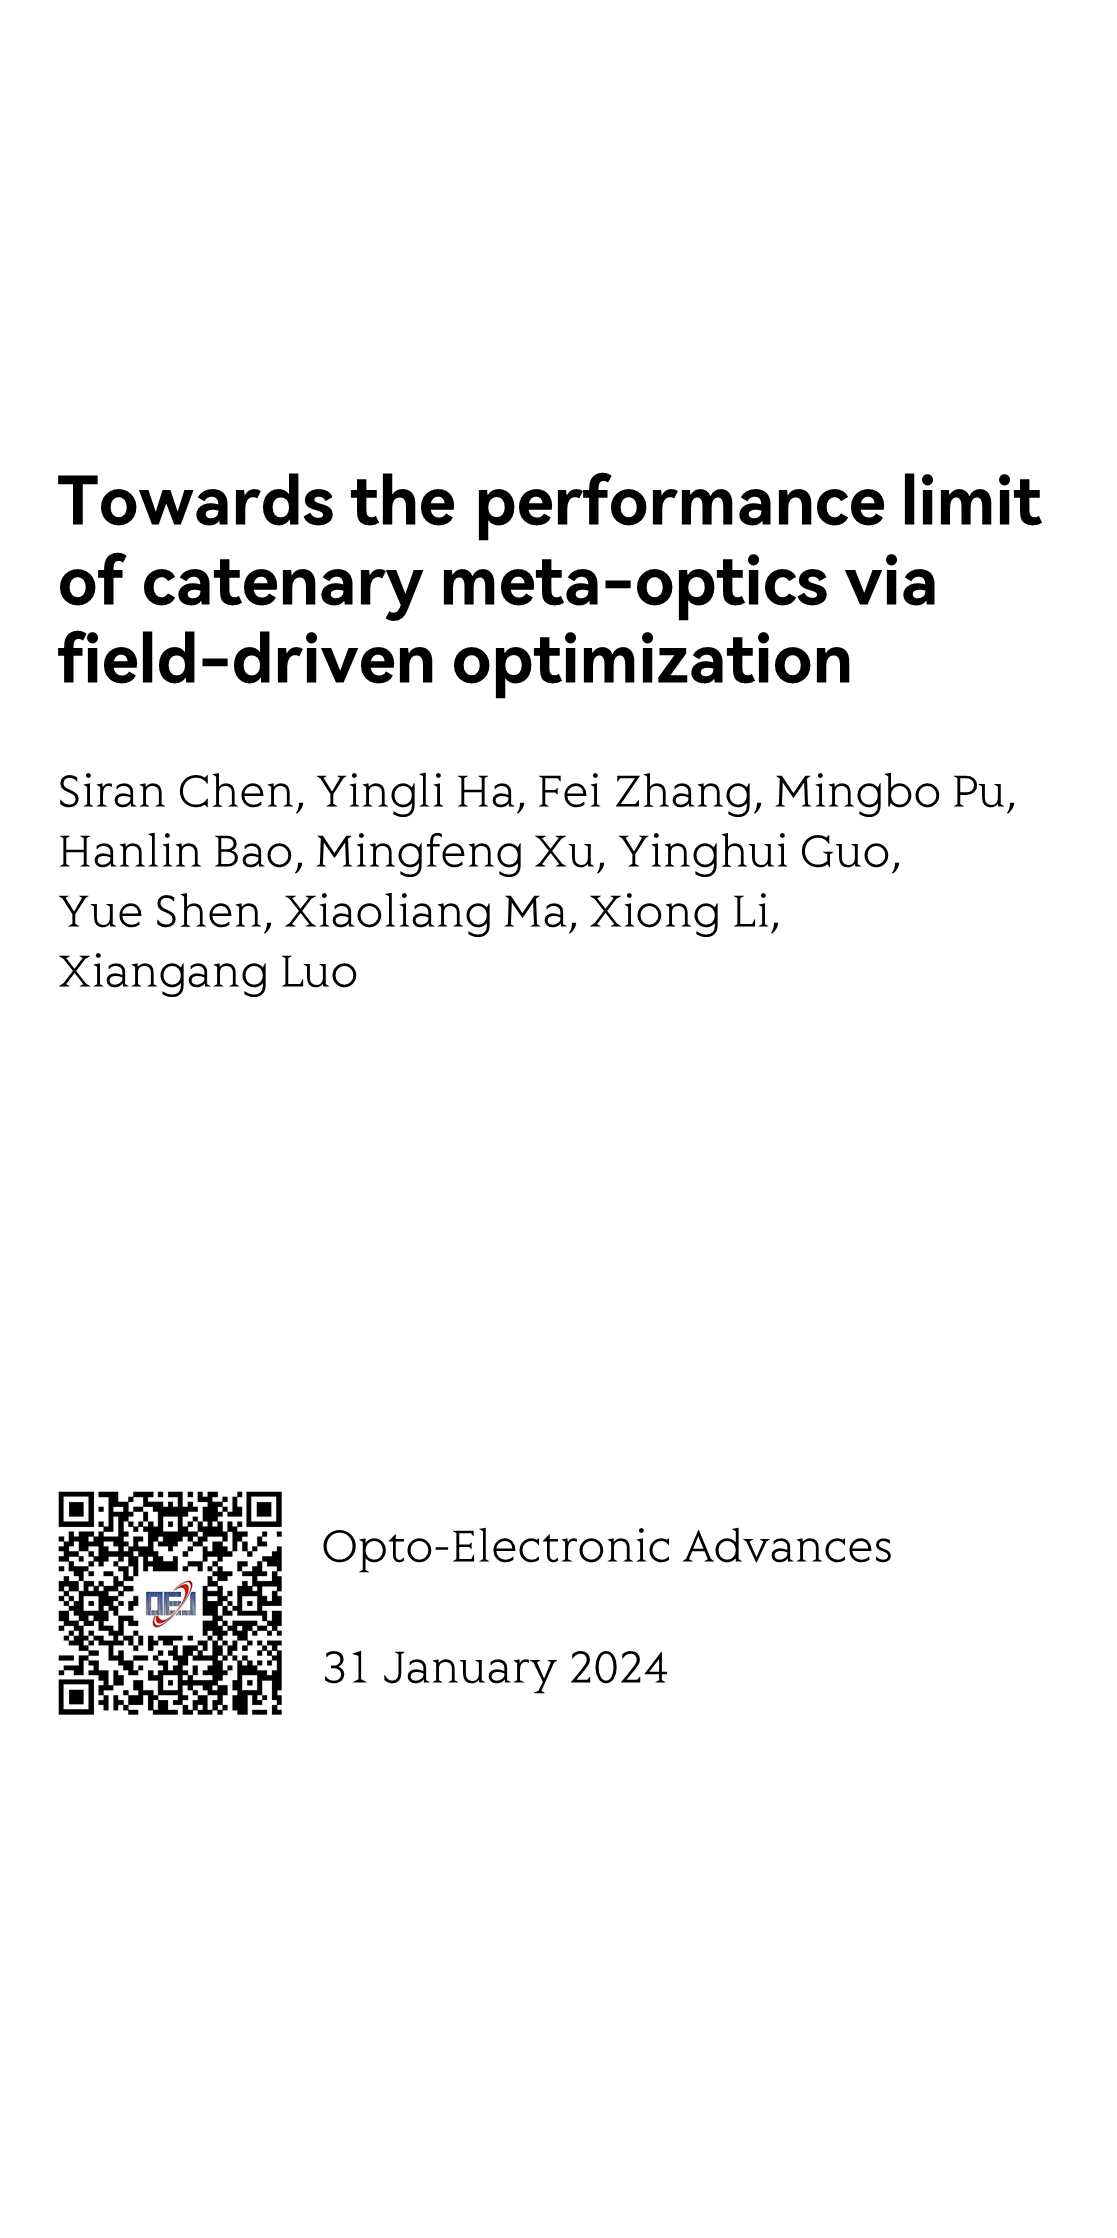 Towards the performance limit of catenary meta-optics via field-driven optimization_1